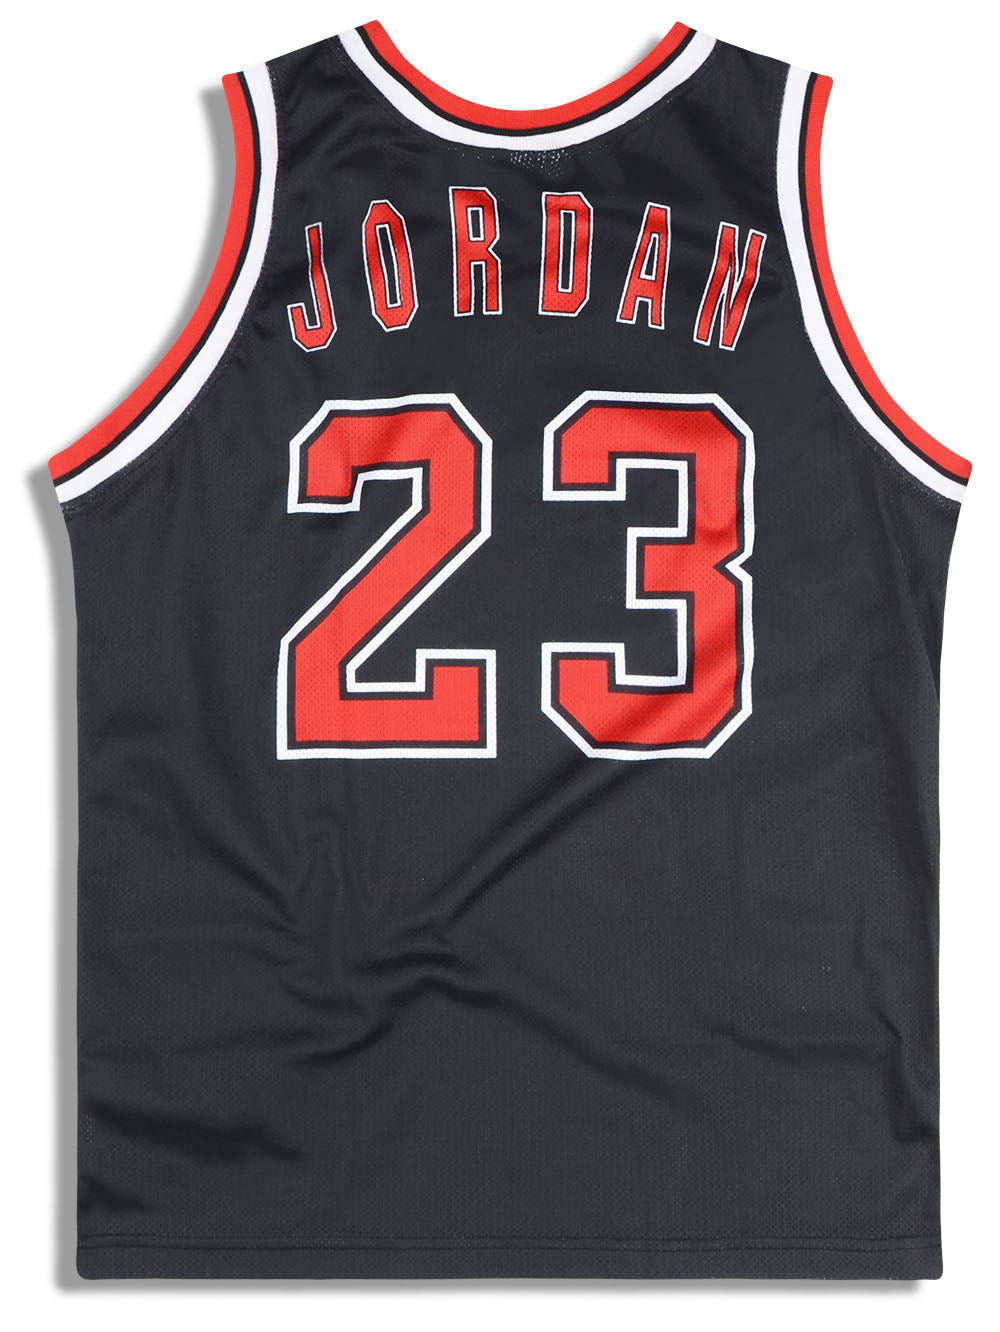 MICHAEL JORDAN: The Miami Heat retire his Jersey #23 